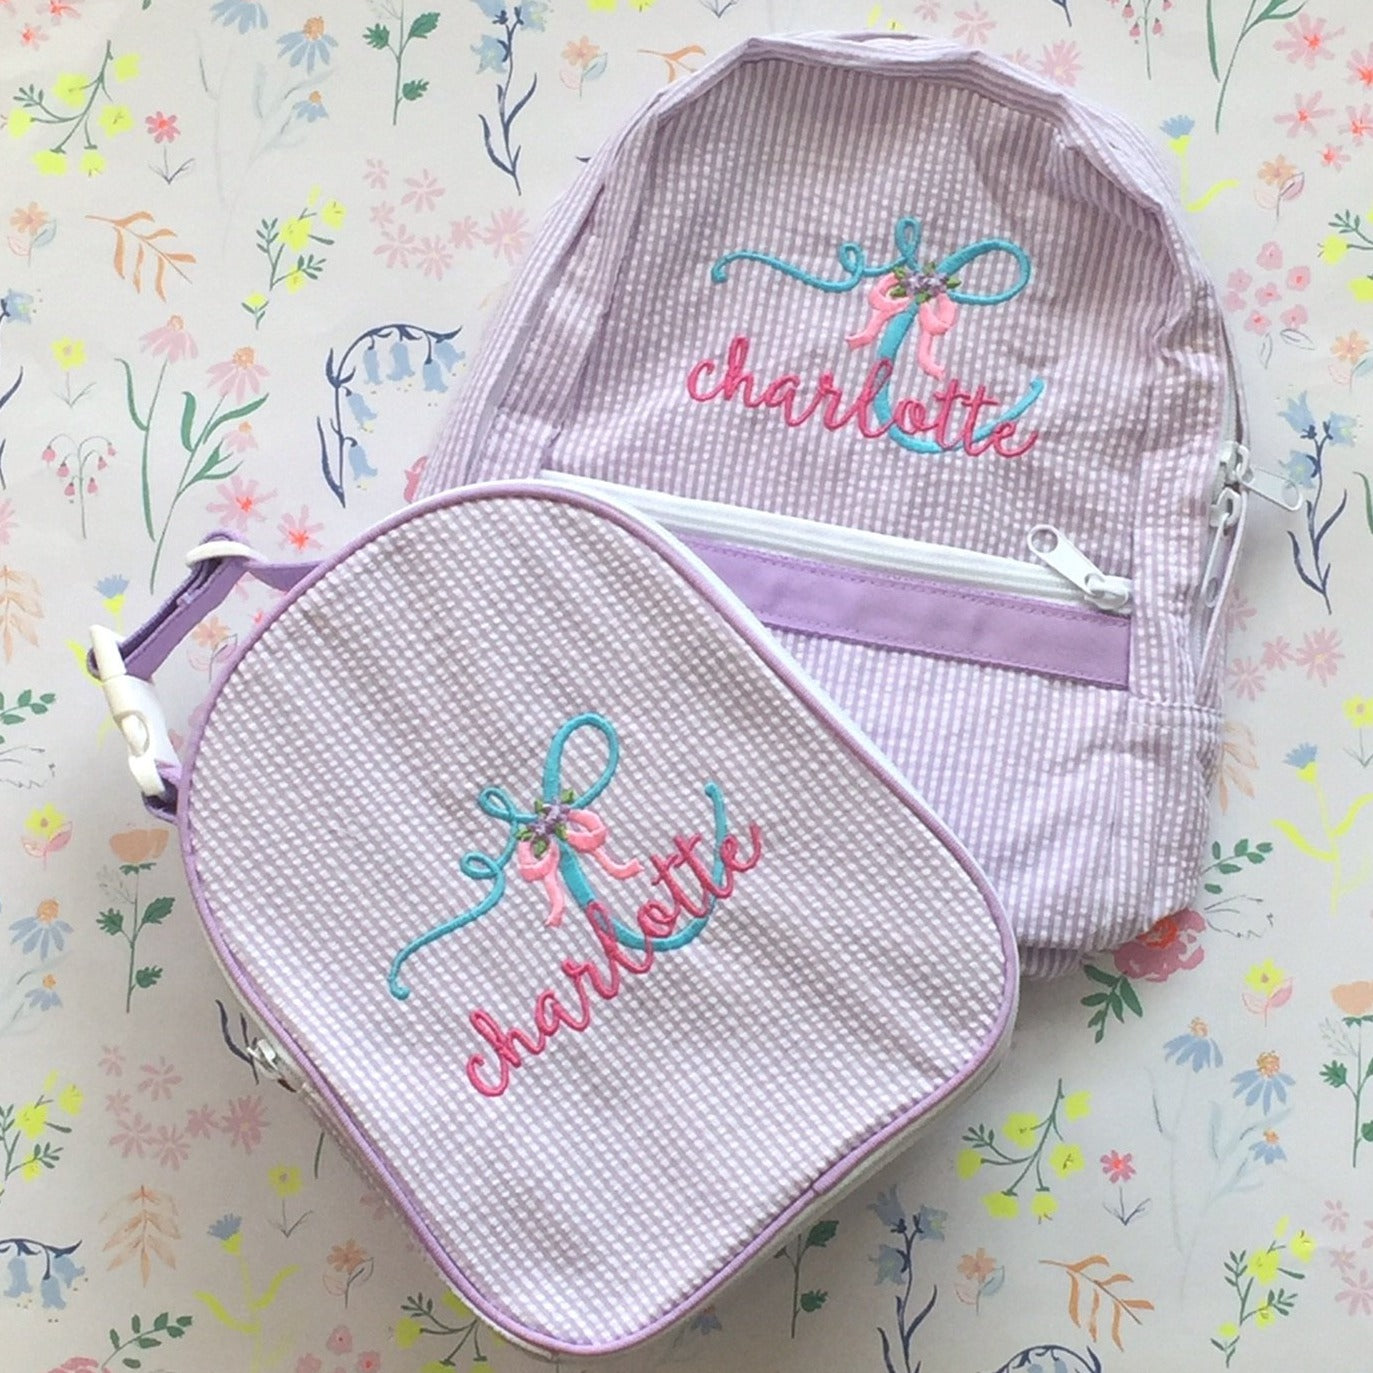 Handmade bags on Instagram: Miniature sized backpack 🎒 Holds